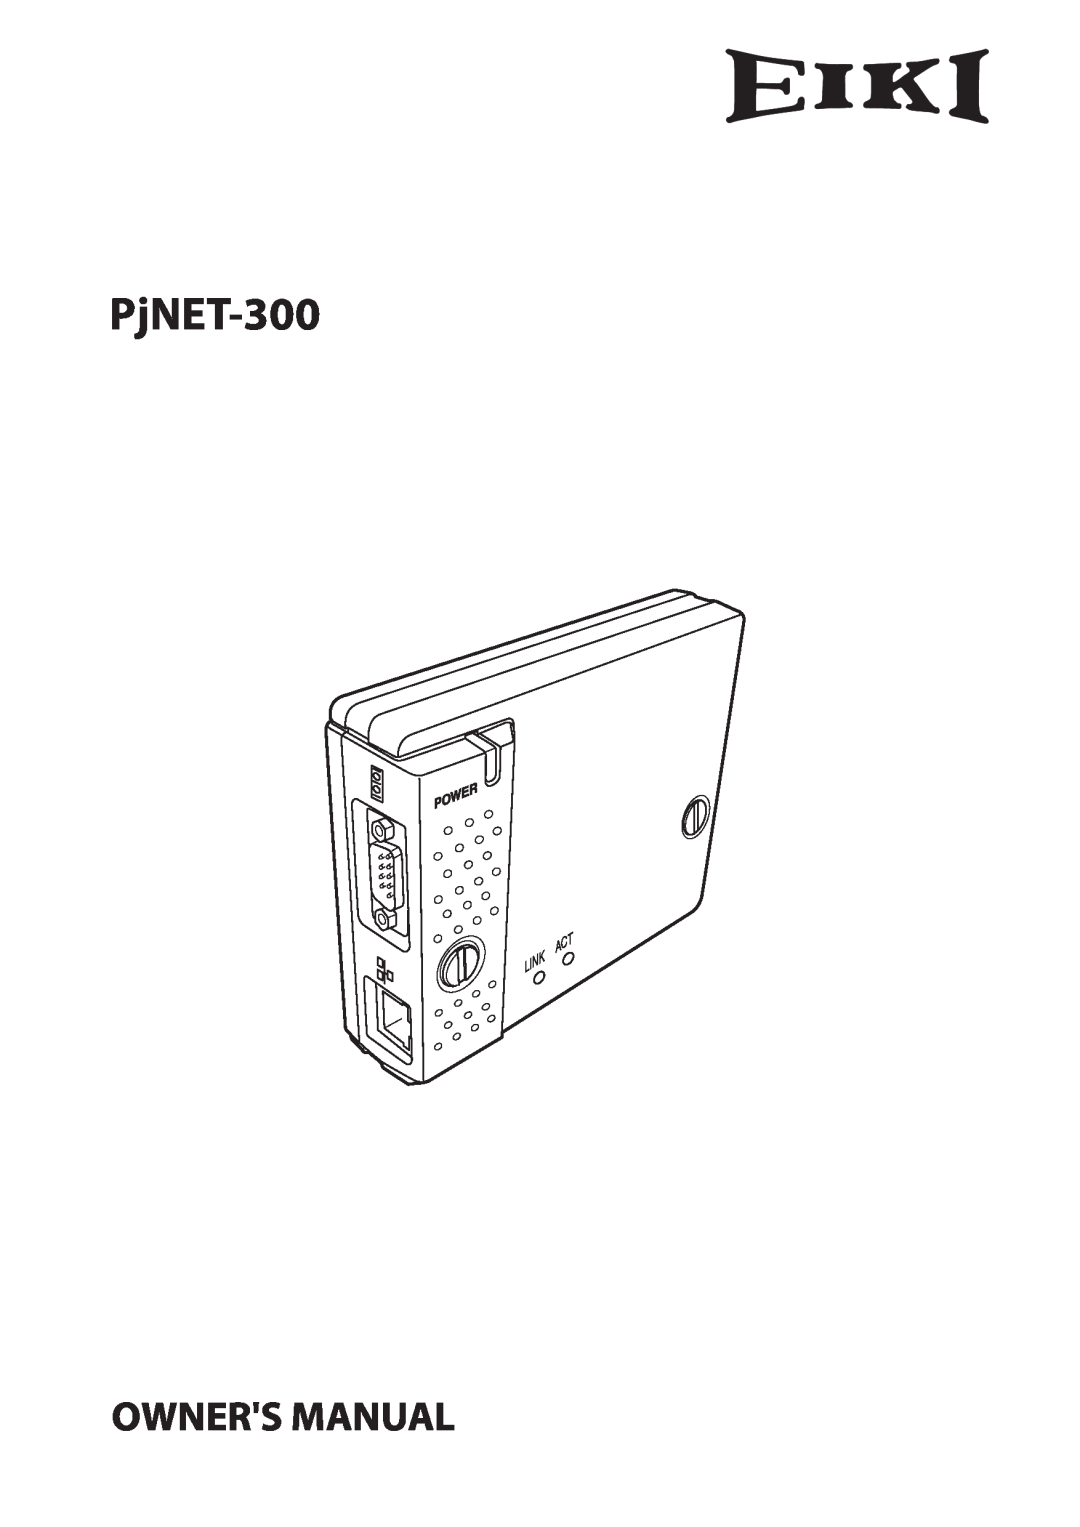 Eiki PJNET-300 owner manual PjNET-300, Owners Manual 